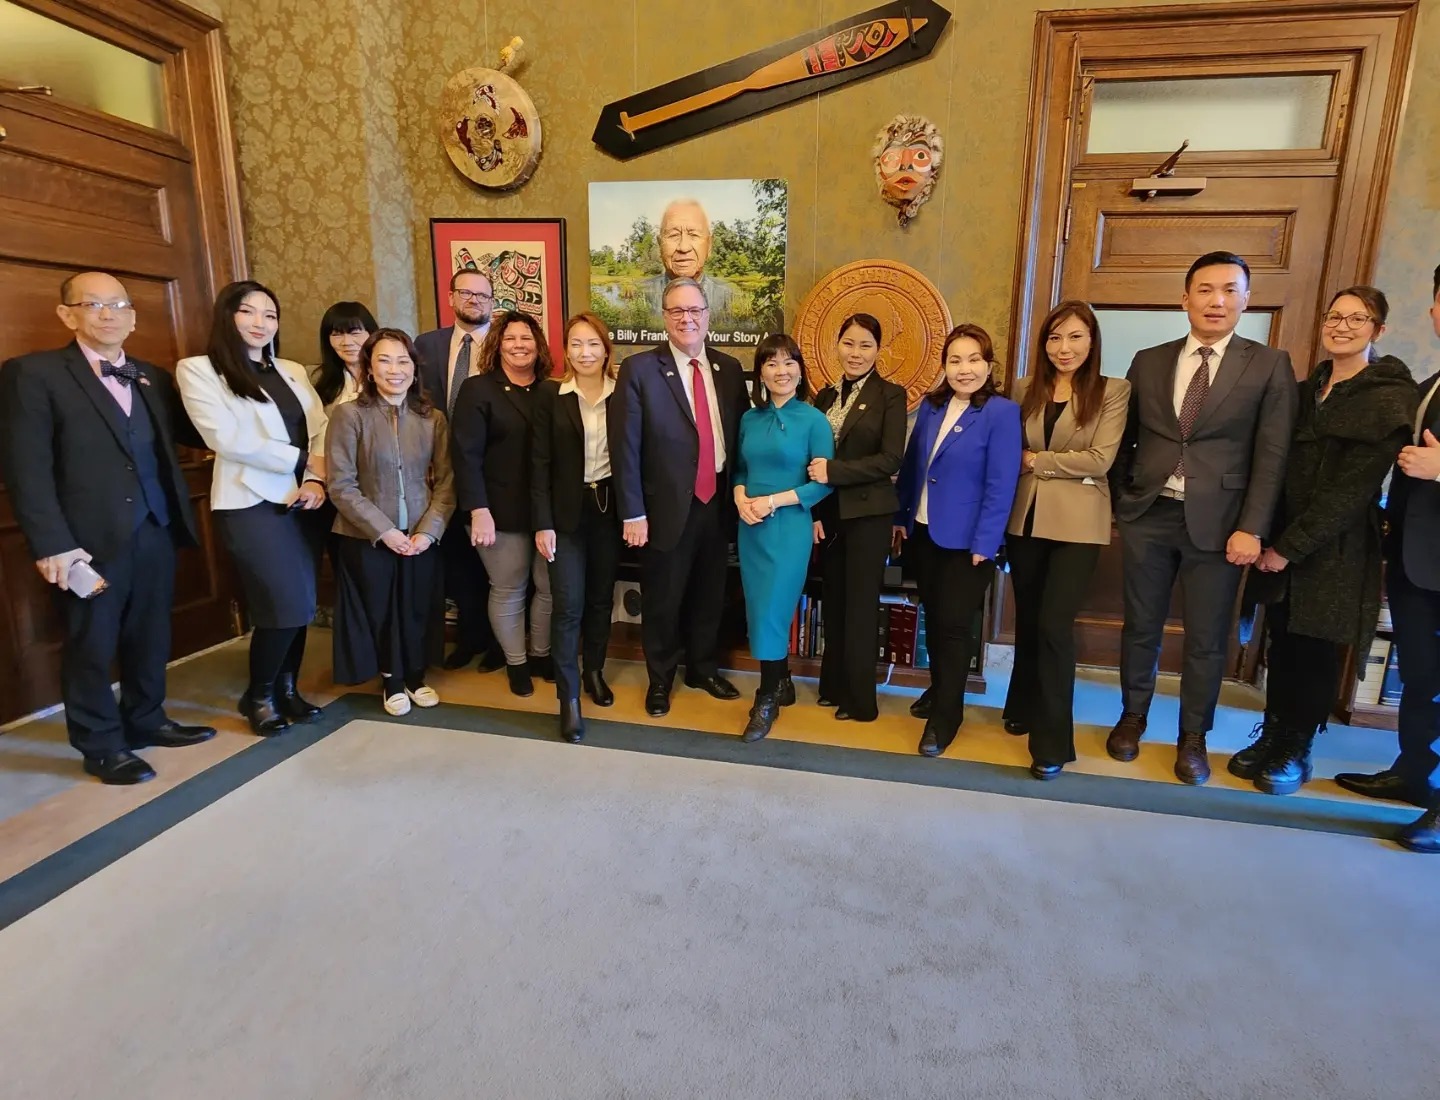 mongolian realtors meeting with WR staff and legislators